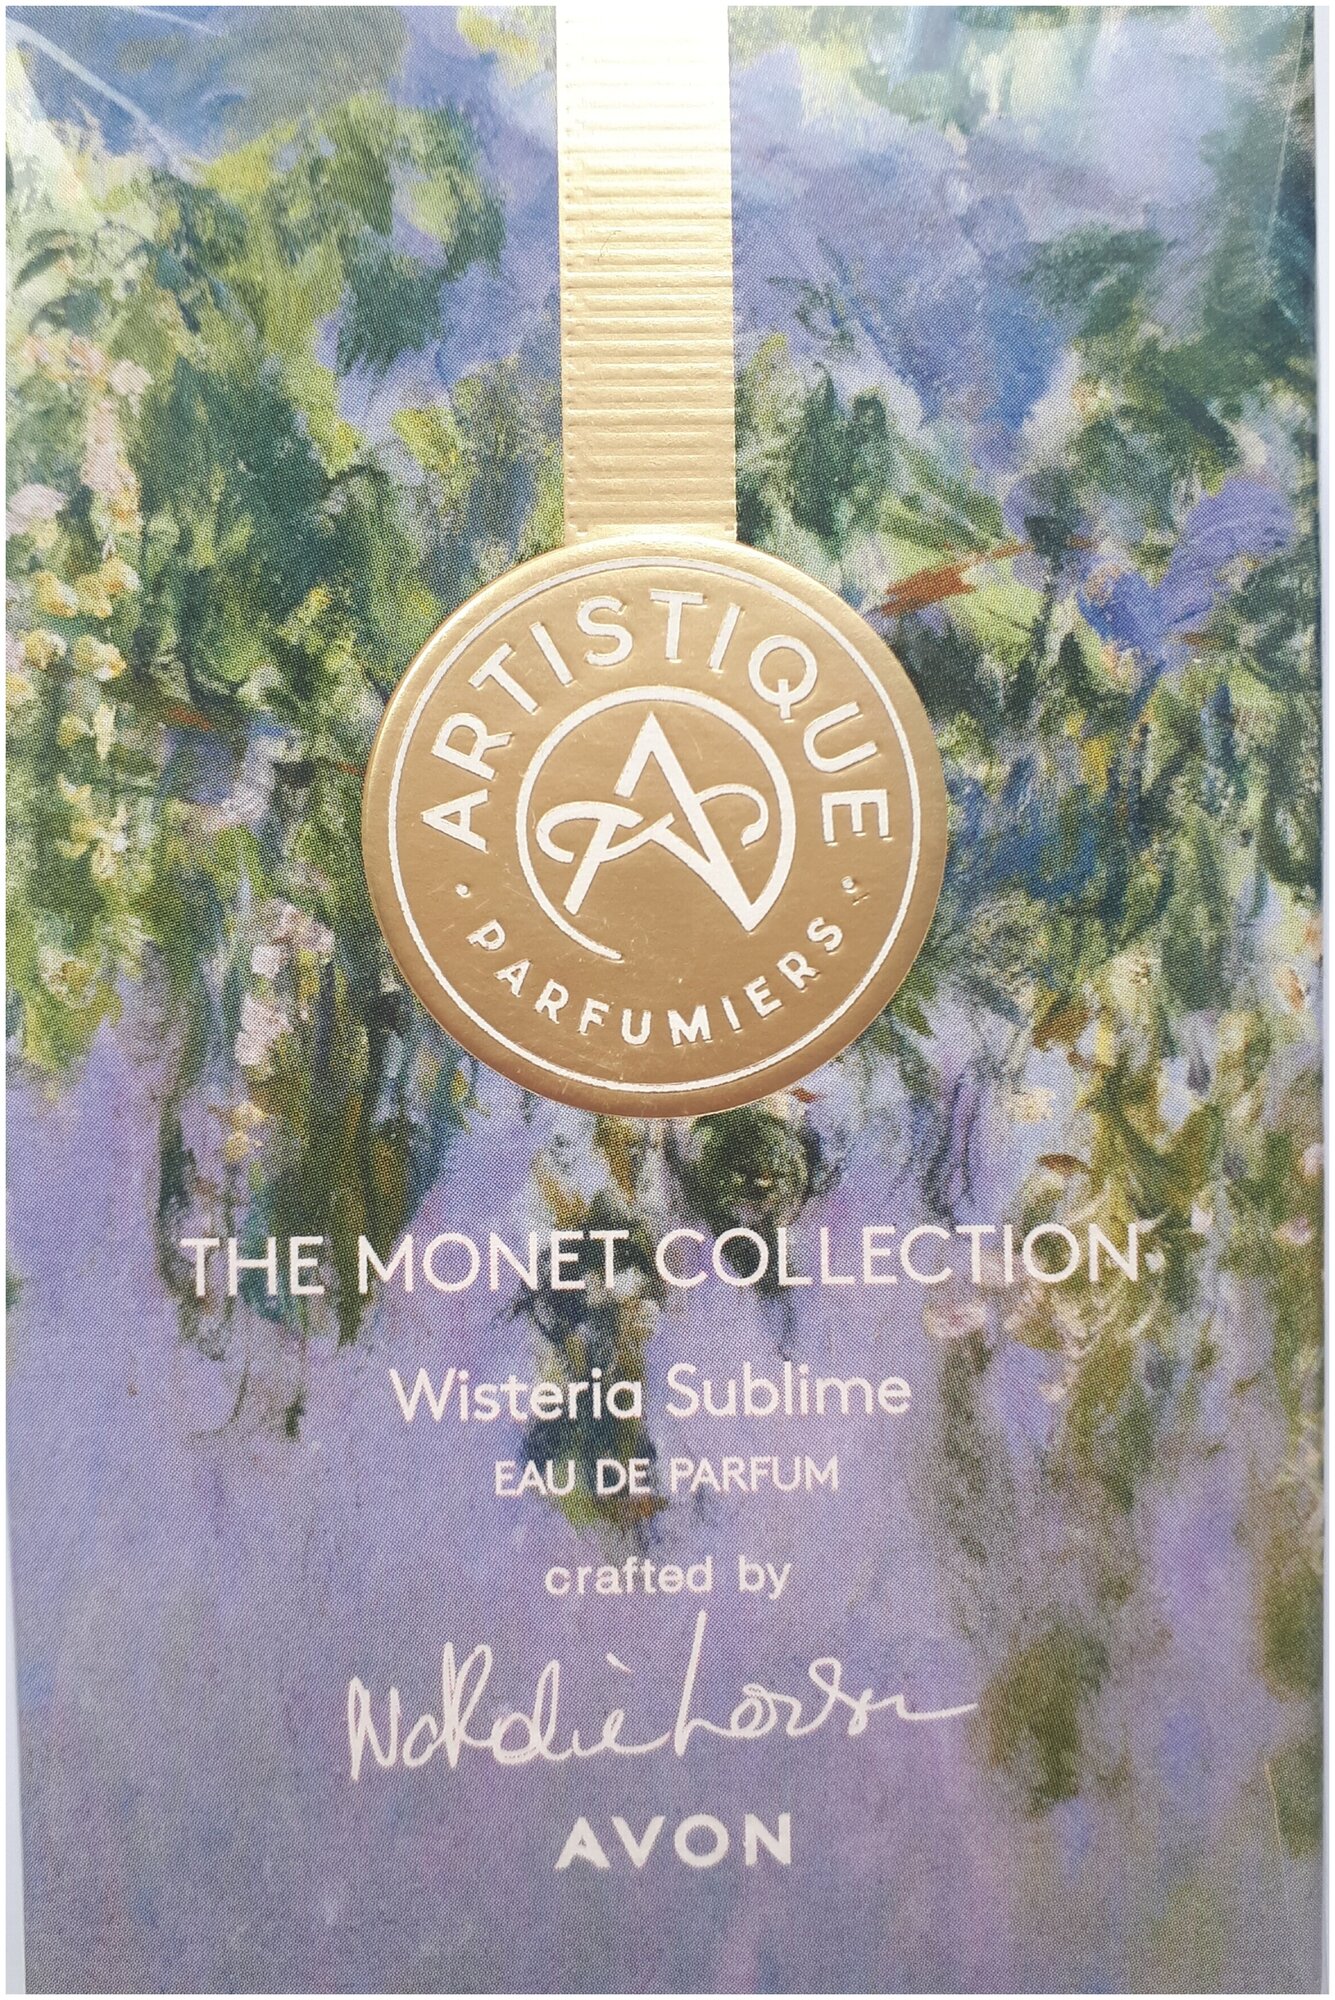 Туалетная вода Artistique AVON, The moment Collection, Wisteria Sublime, для неё, 50 мл. Авторский аромат. Limited edition.